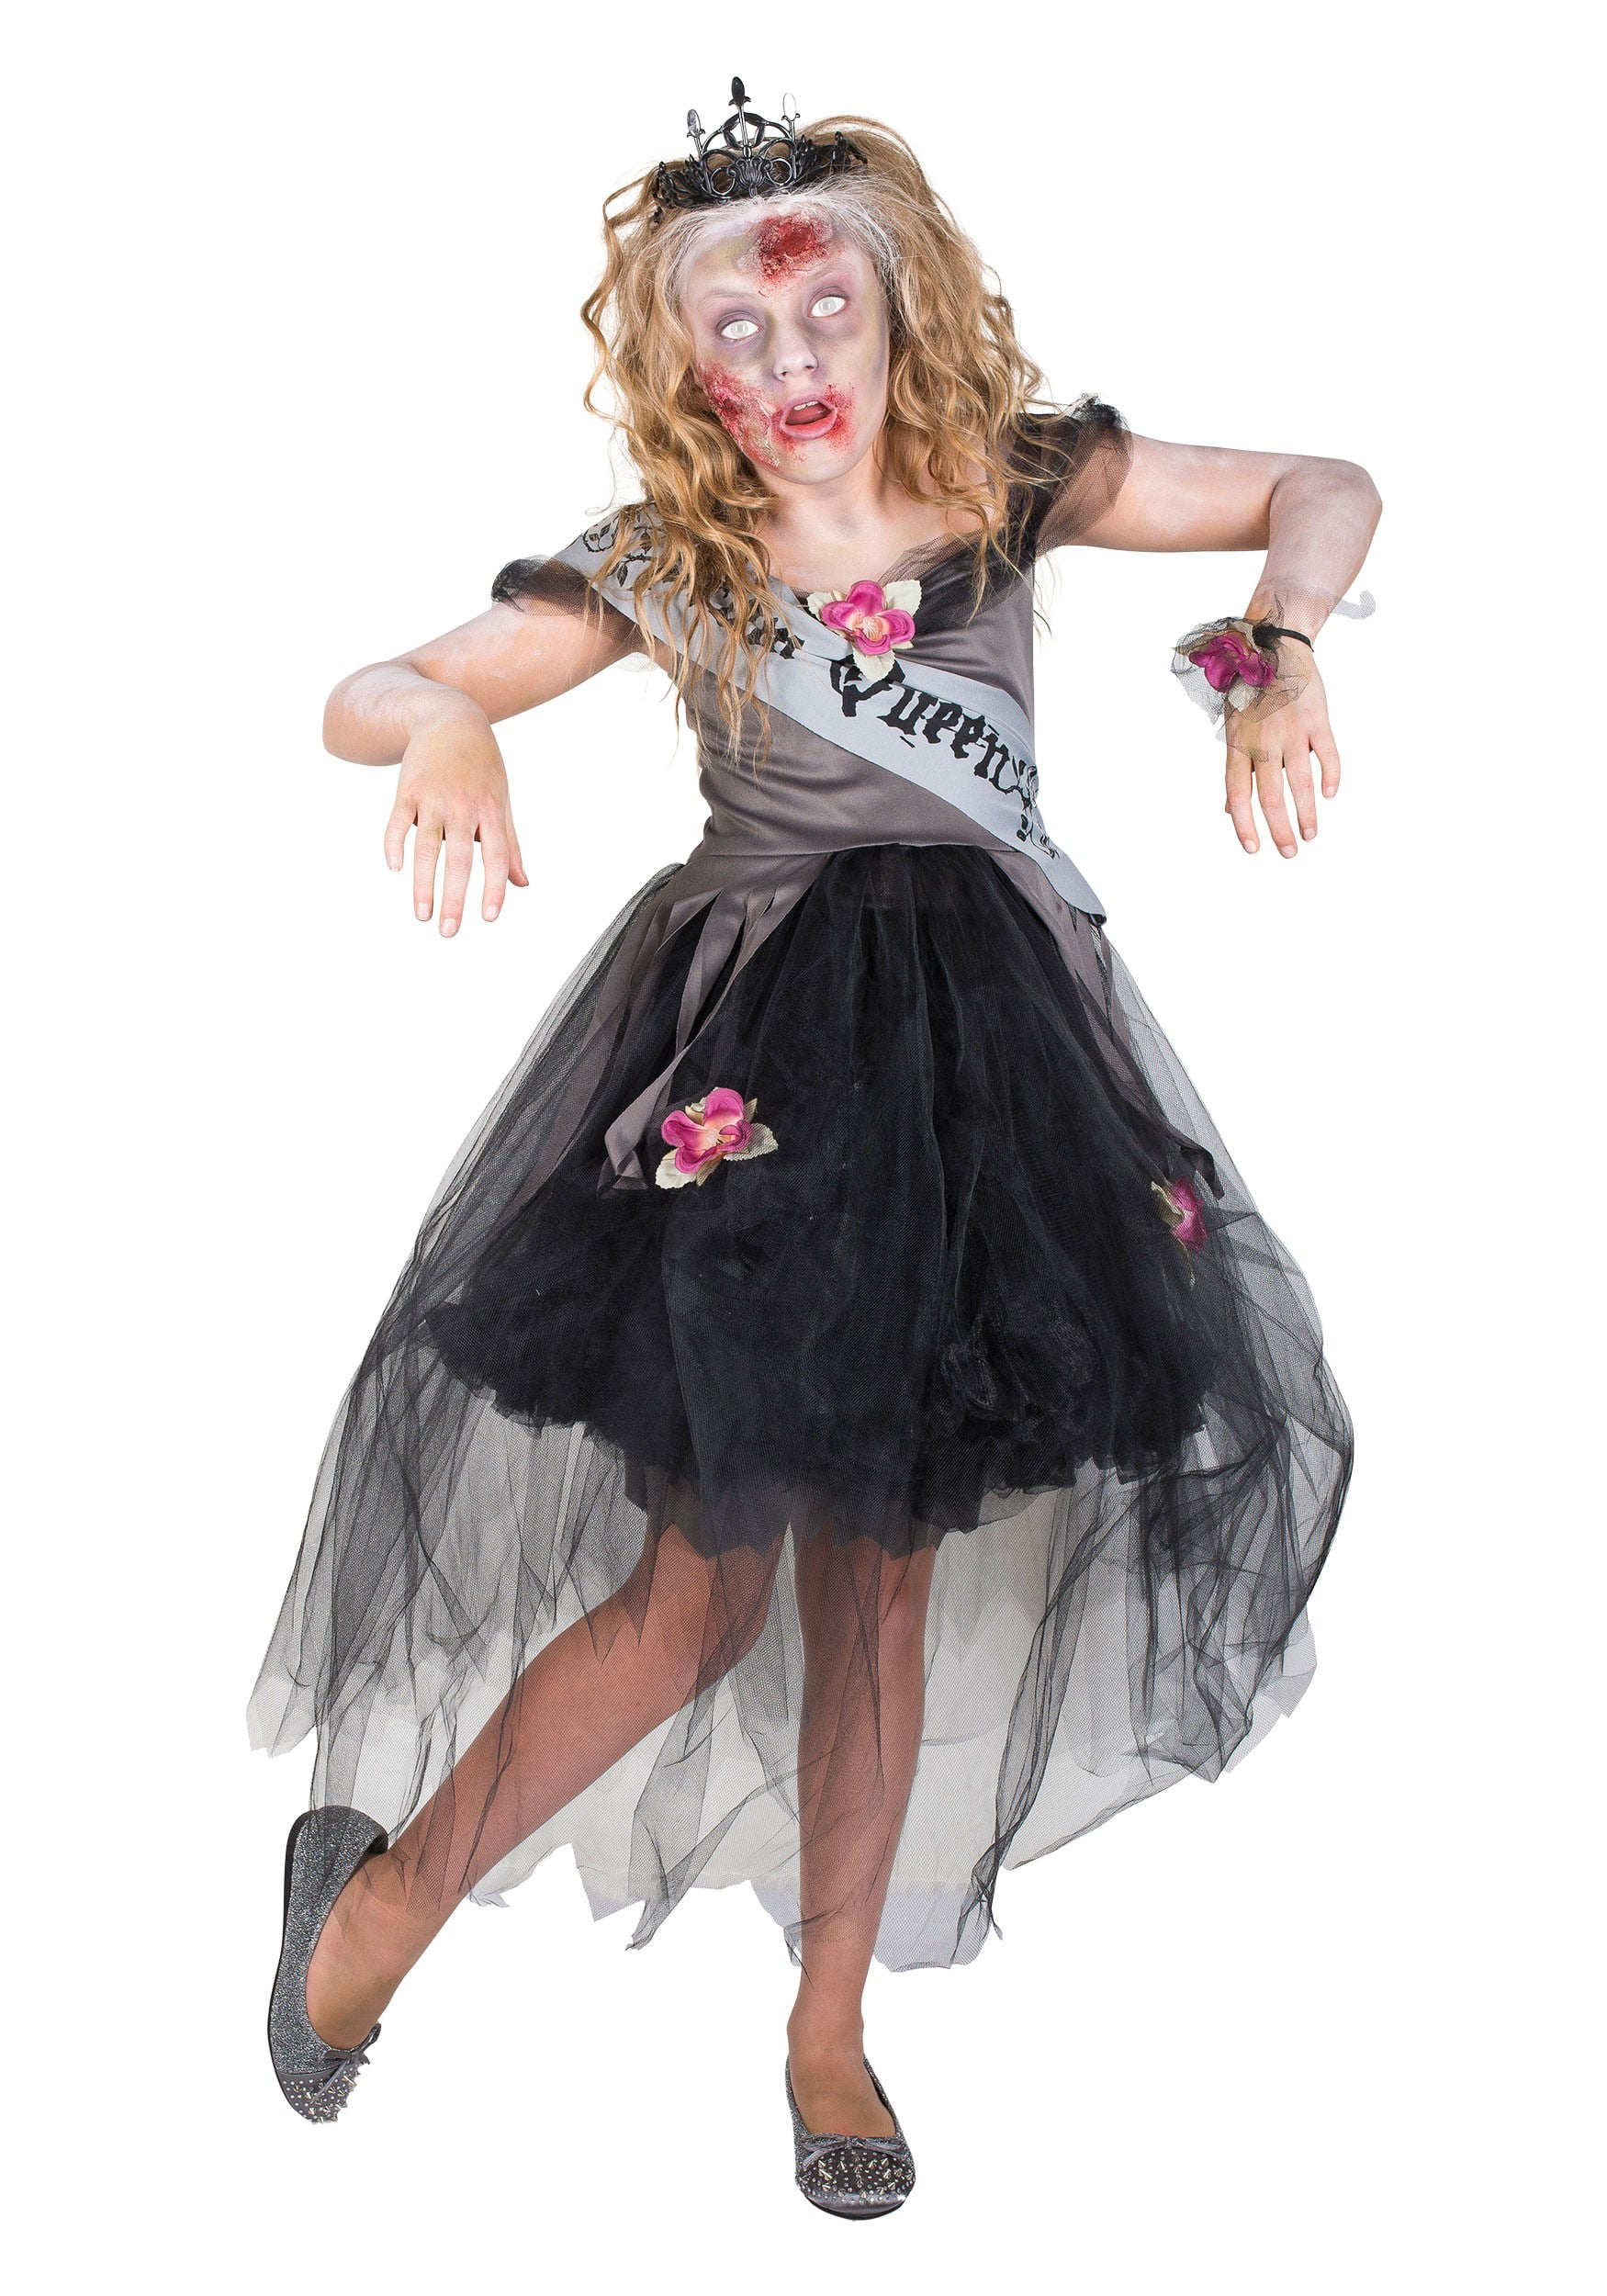  Zombie  Prom  Queen  Costume for Girls Walmart com 